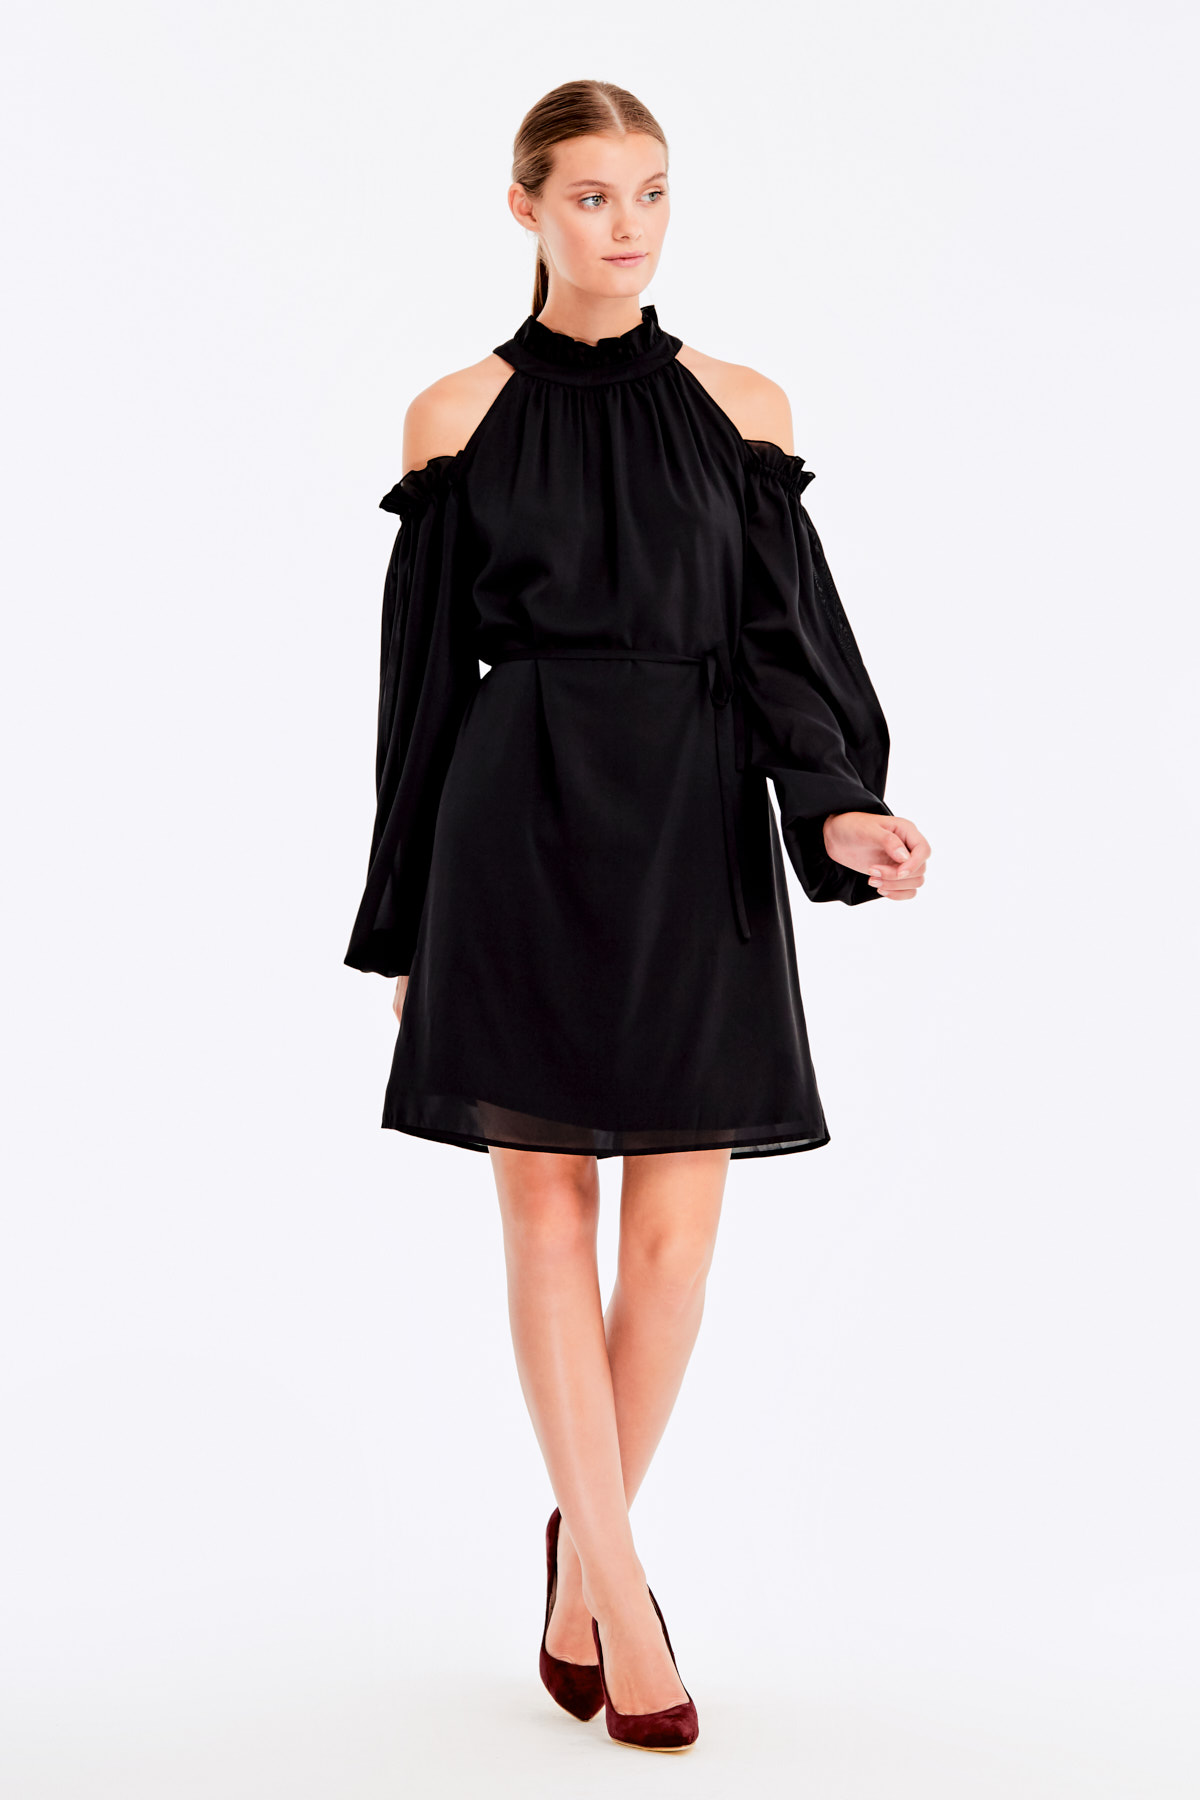 Open shoulder black chiffon dress, photo 8